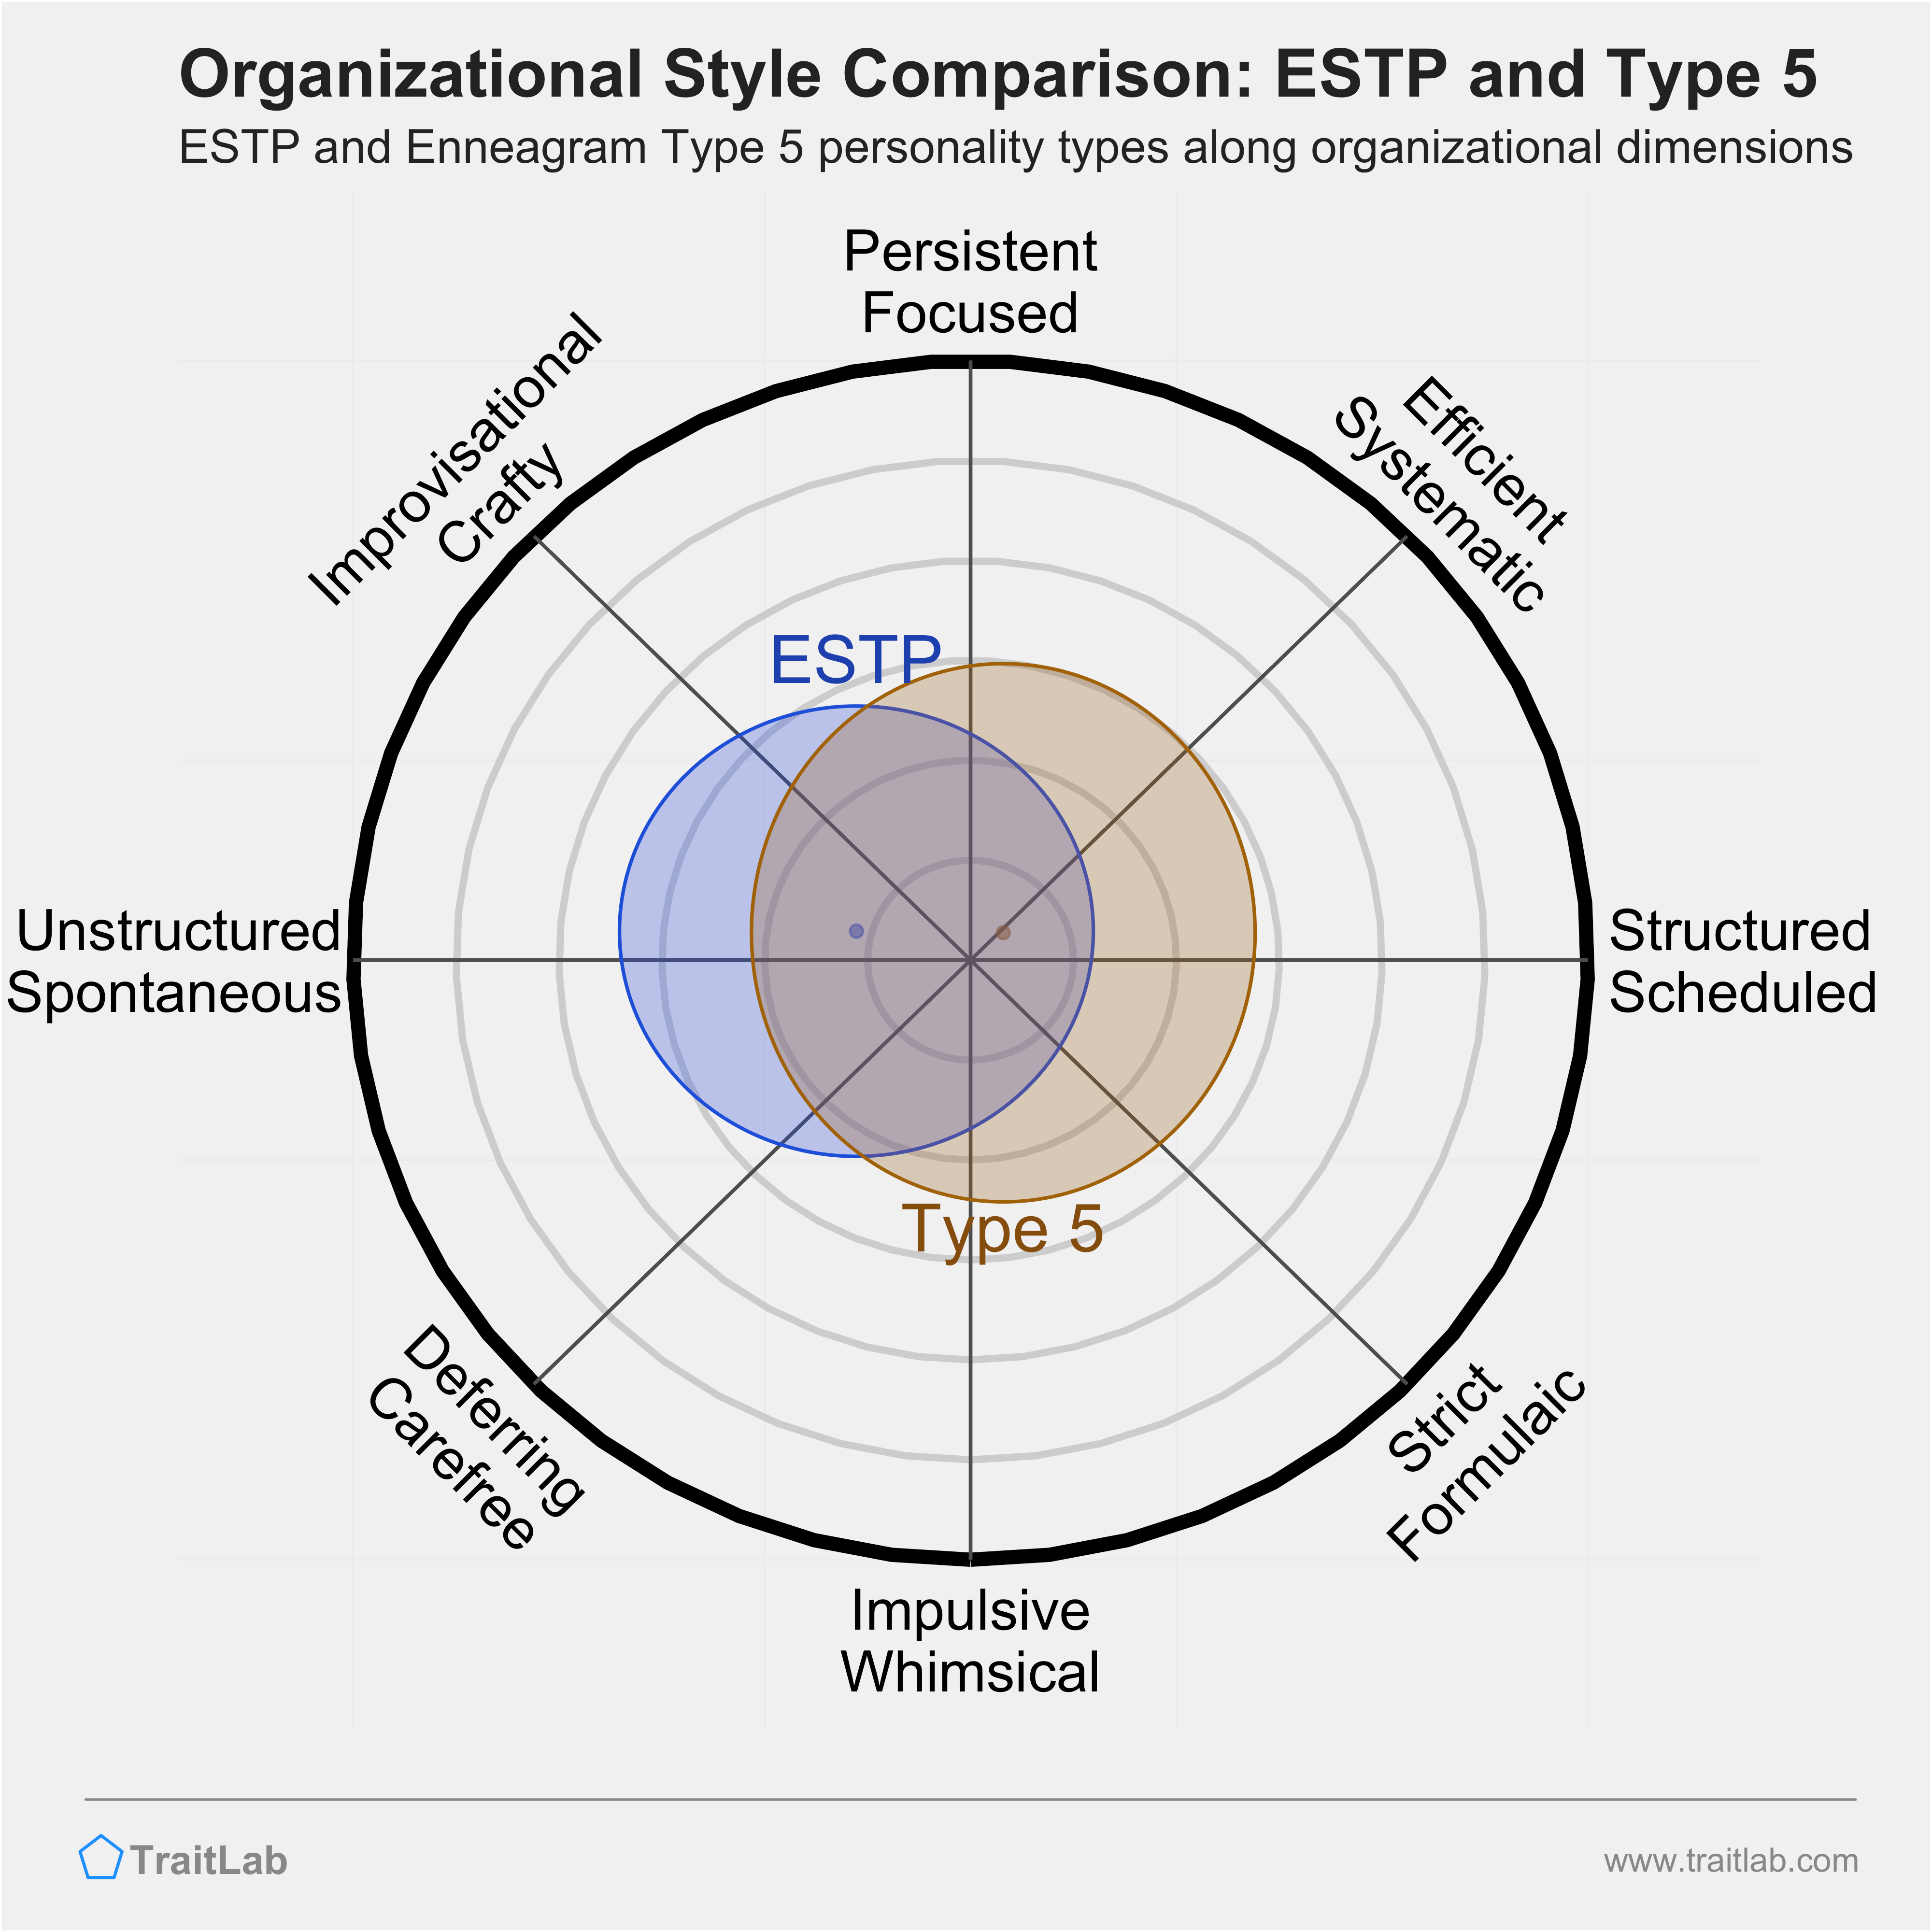 ESTP and Type 5 comparison across organizational dimensions